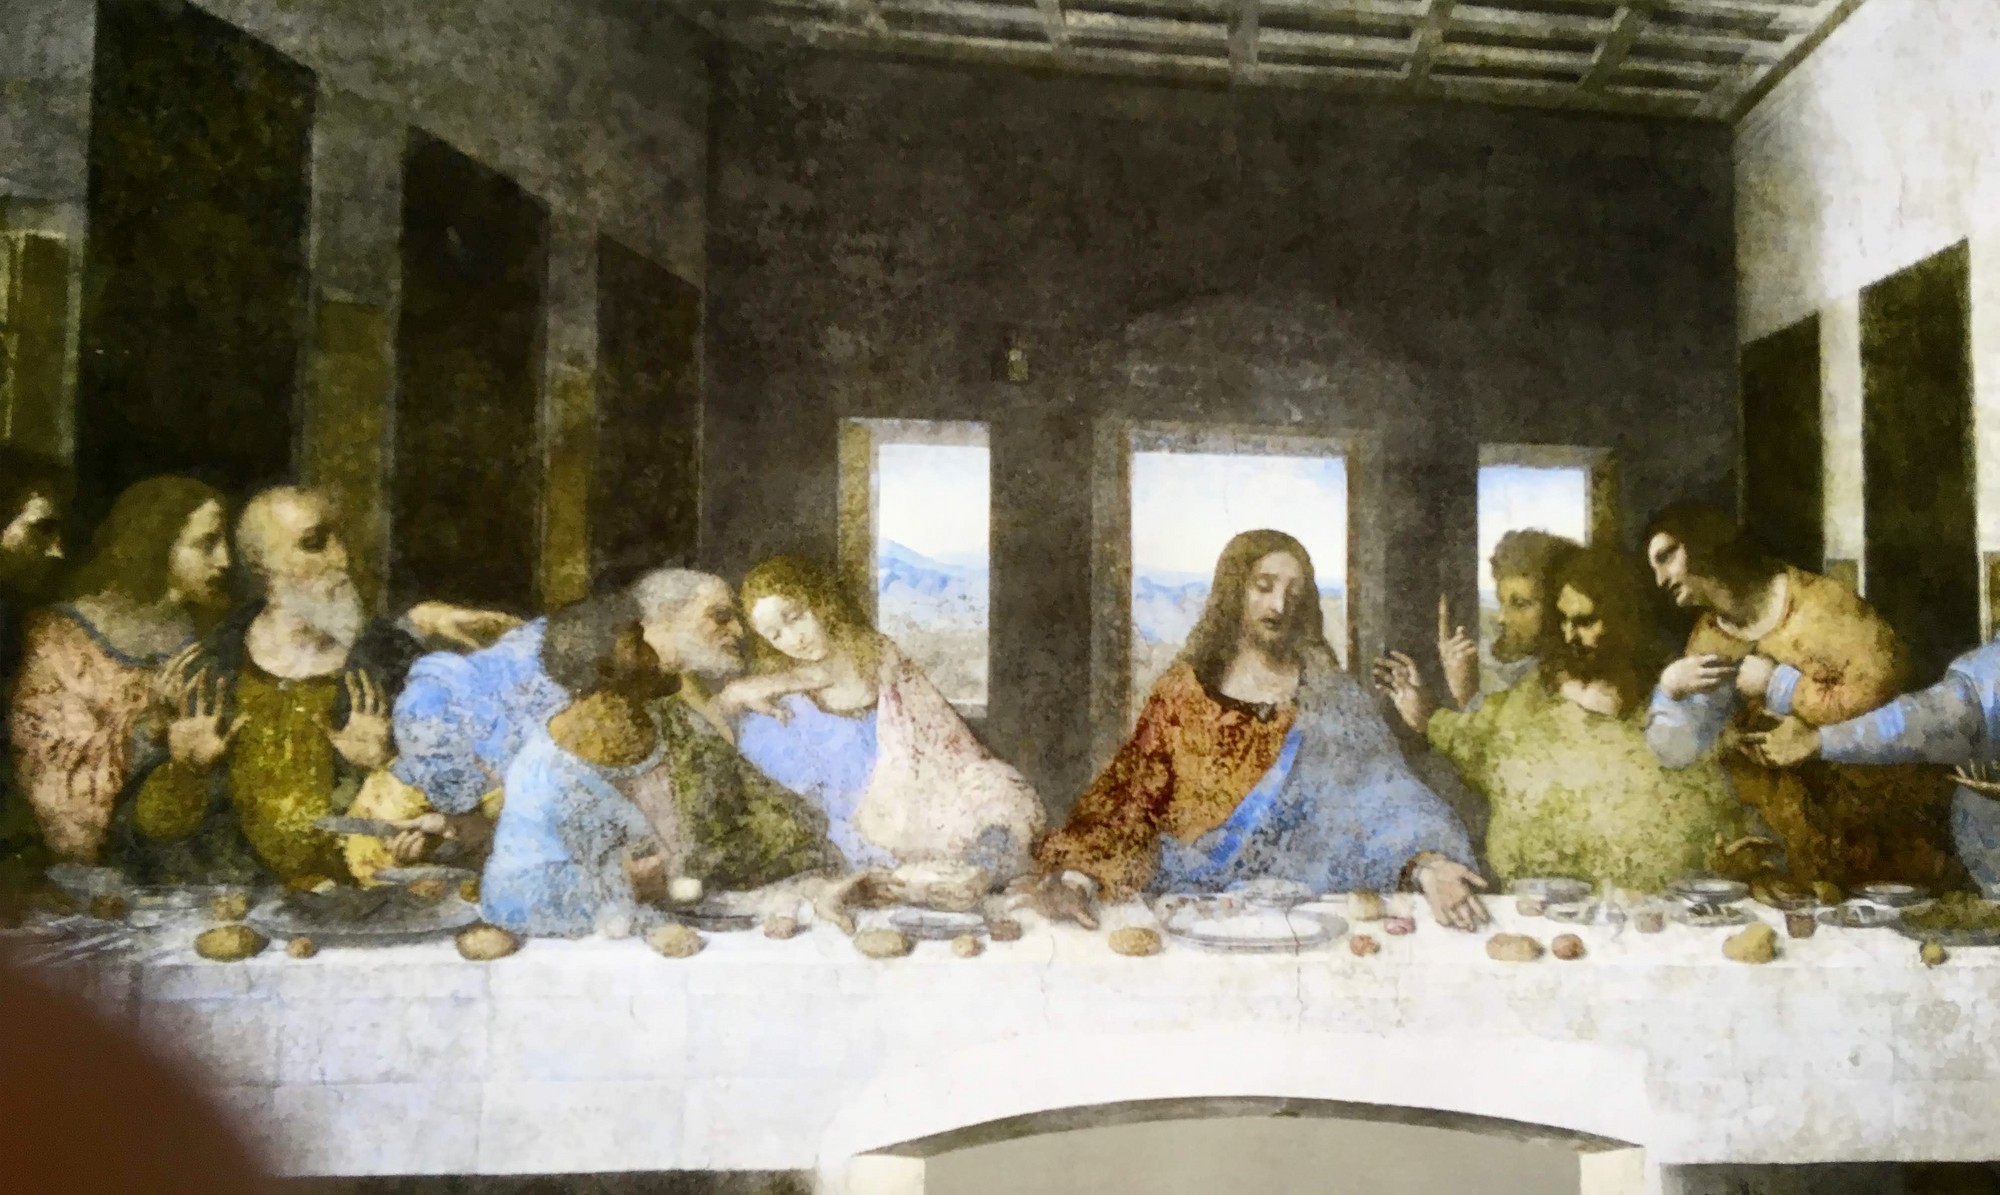 Проекция картины на стене "Тайная вечеря"в музее Леонардо да Винчи в Венеции